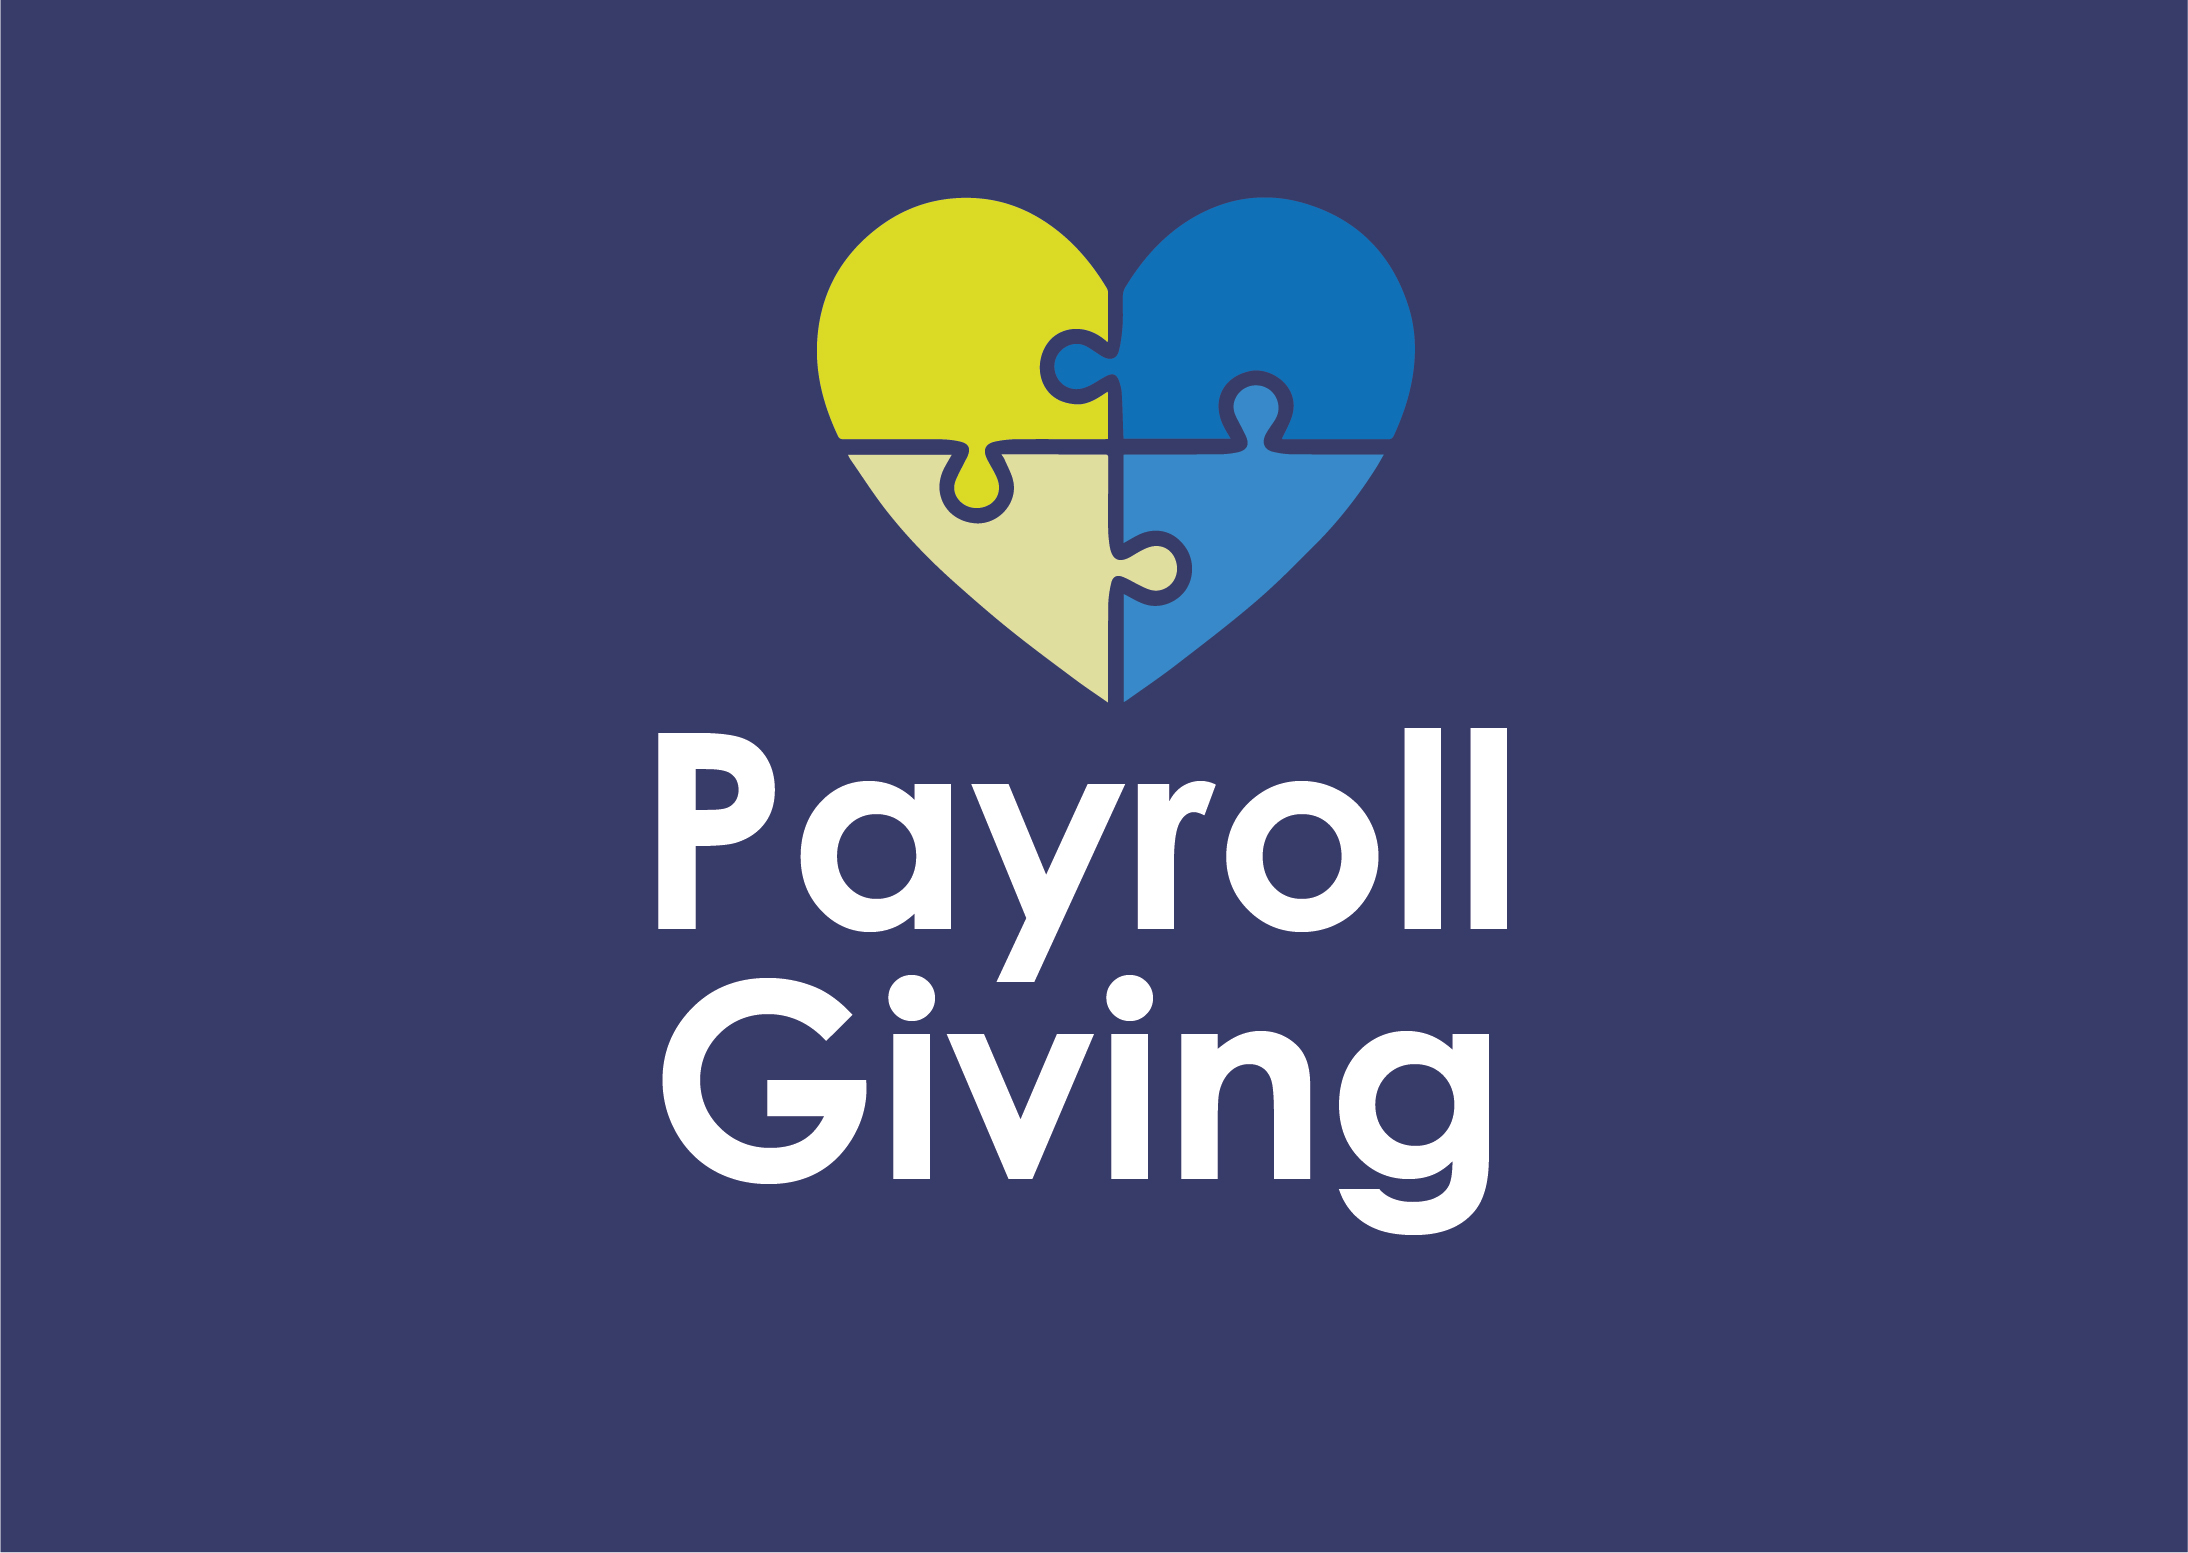 Payroll giving